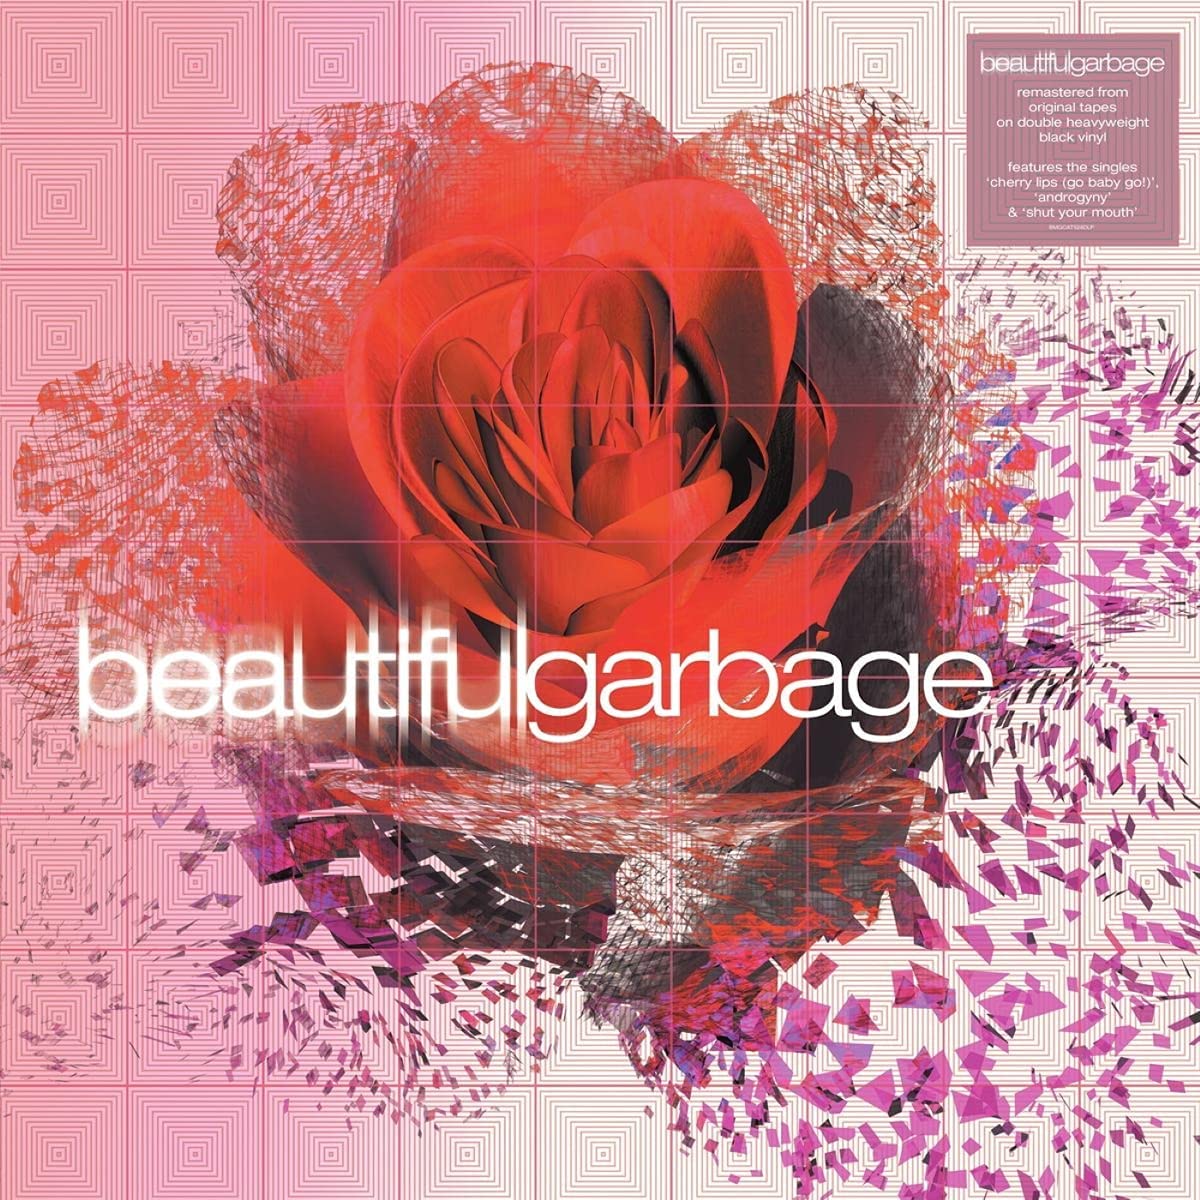 Copertina Vinile 33 giri Beautiful Garbage [2 LP] di Garbage